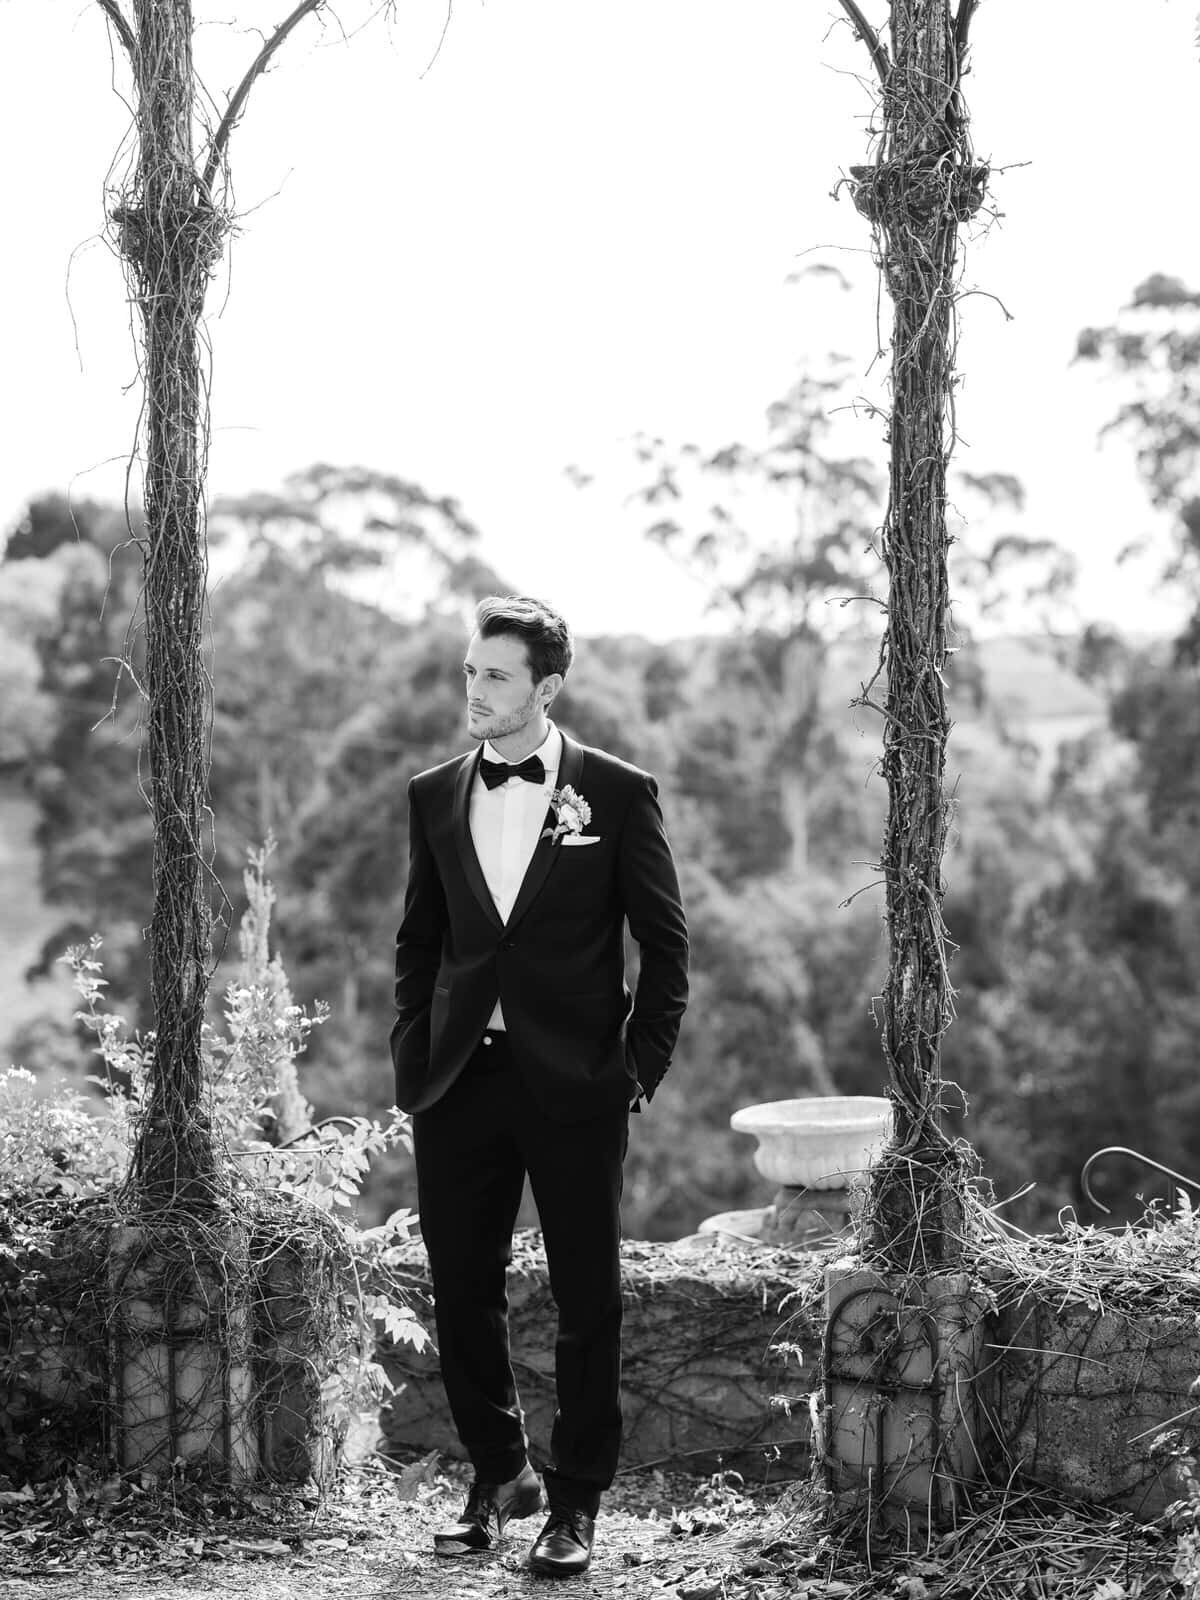 Serenity-photography-groom-attire-YSG-tailors-26